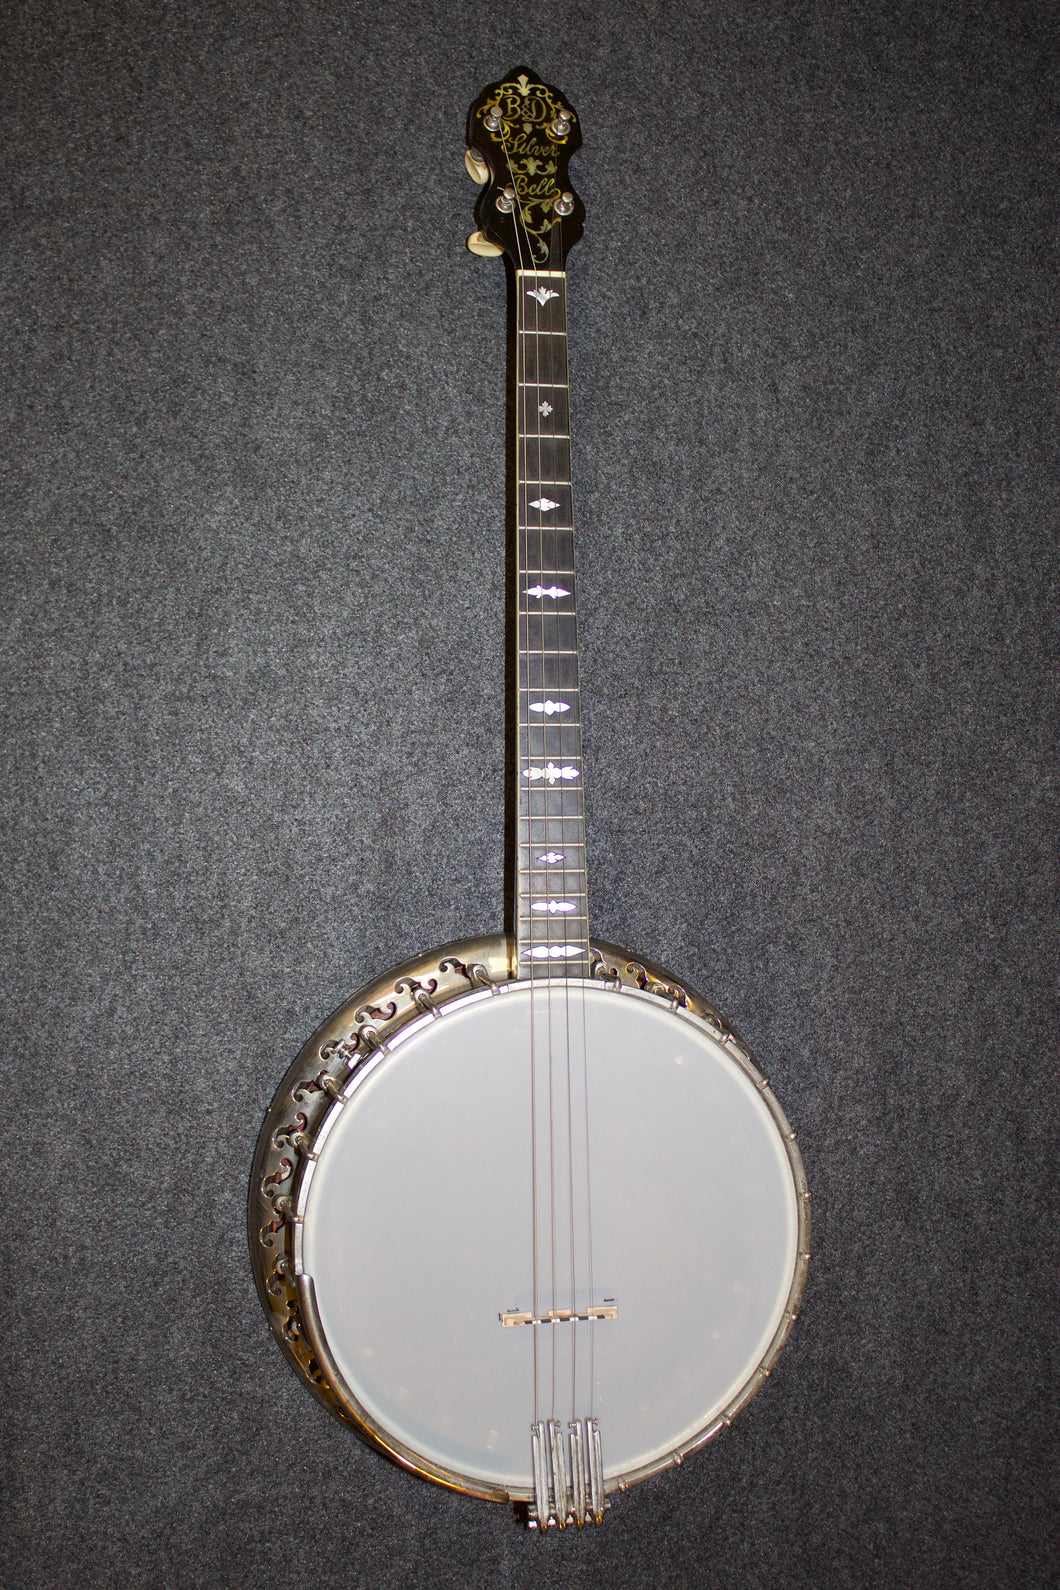 B & D Silver Bell No. 1 Tenor Banjo (1927) - Jakes Main Street Music